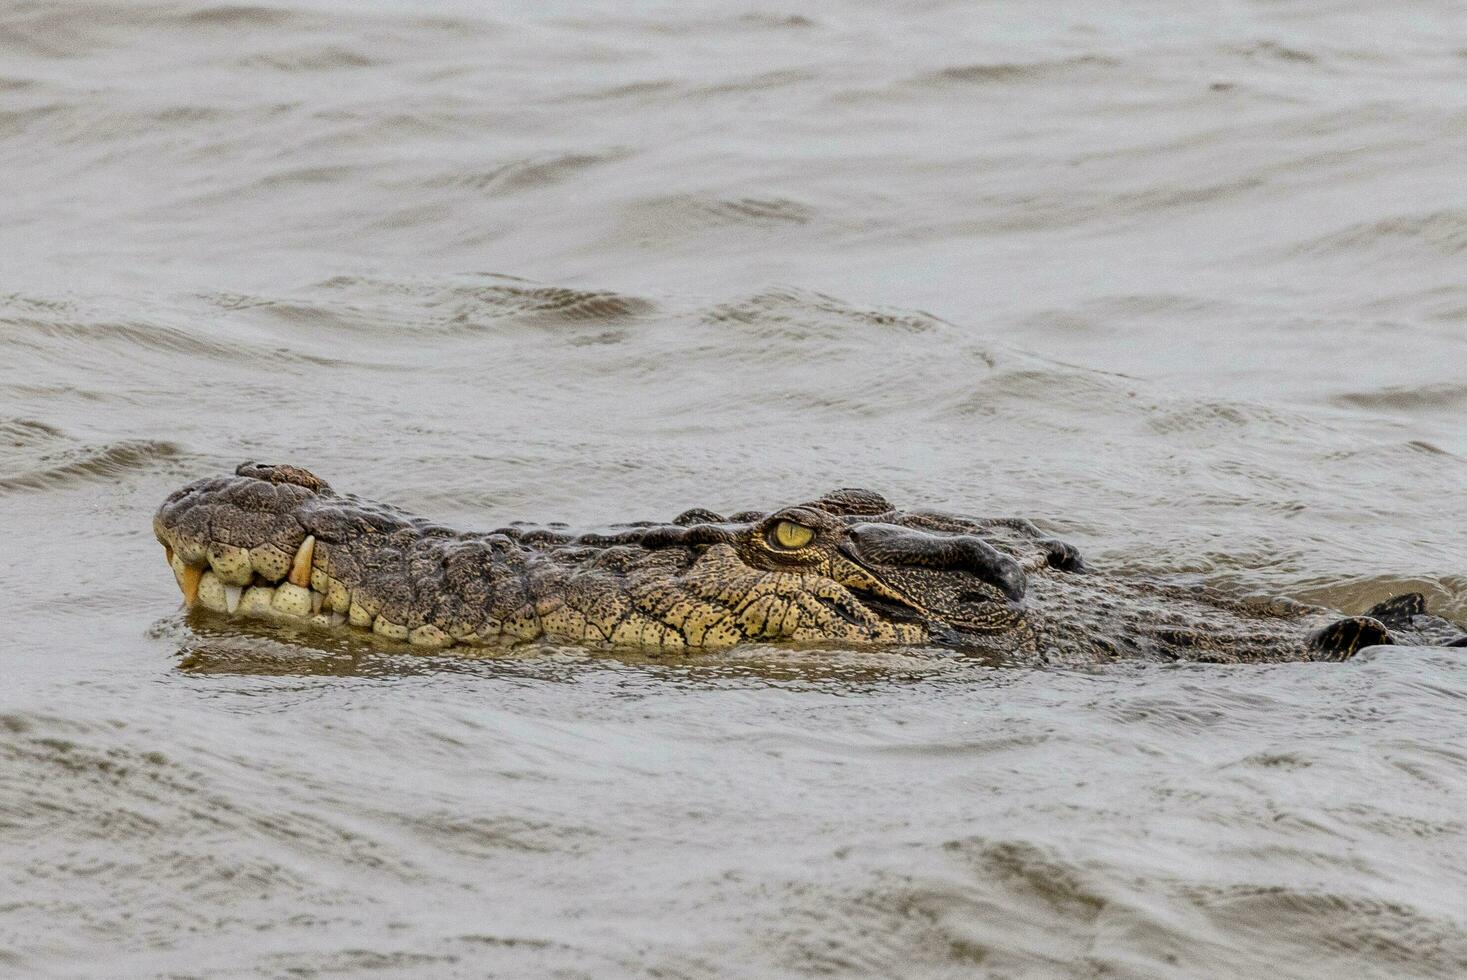 Crocodile in Australia photo